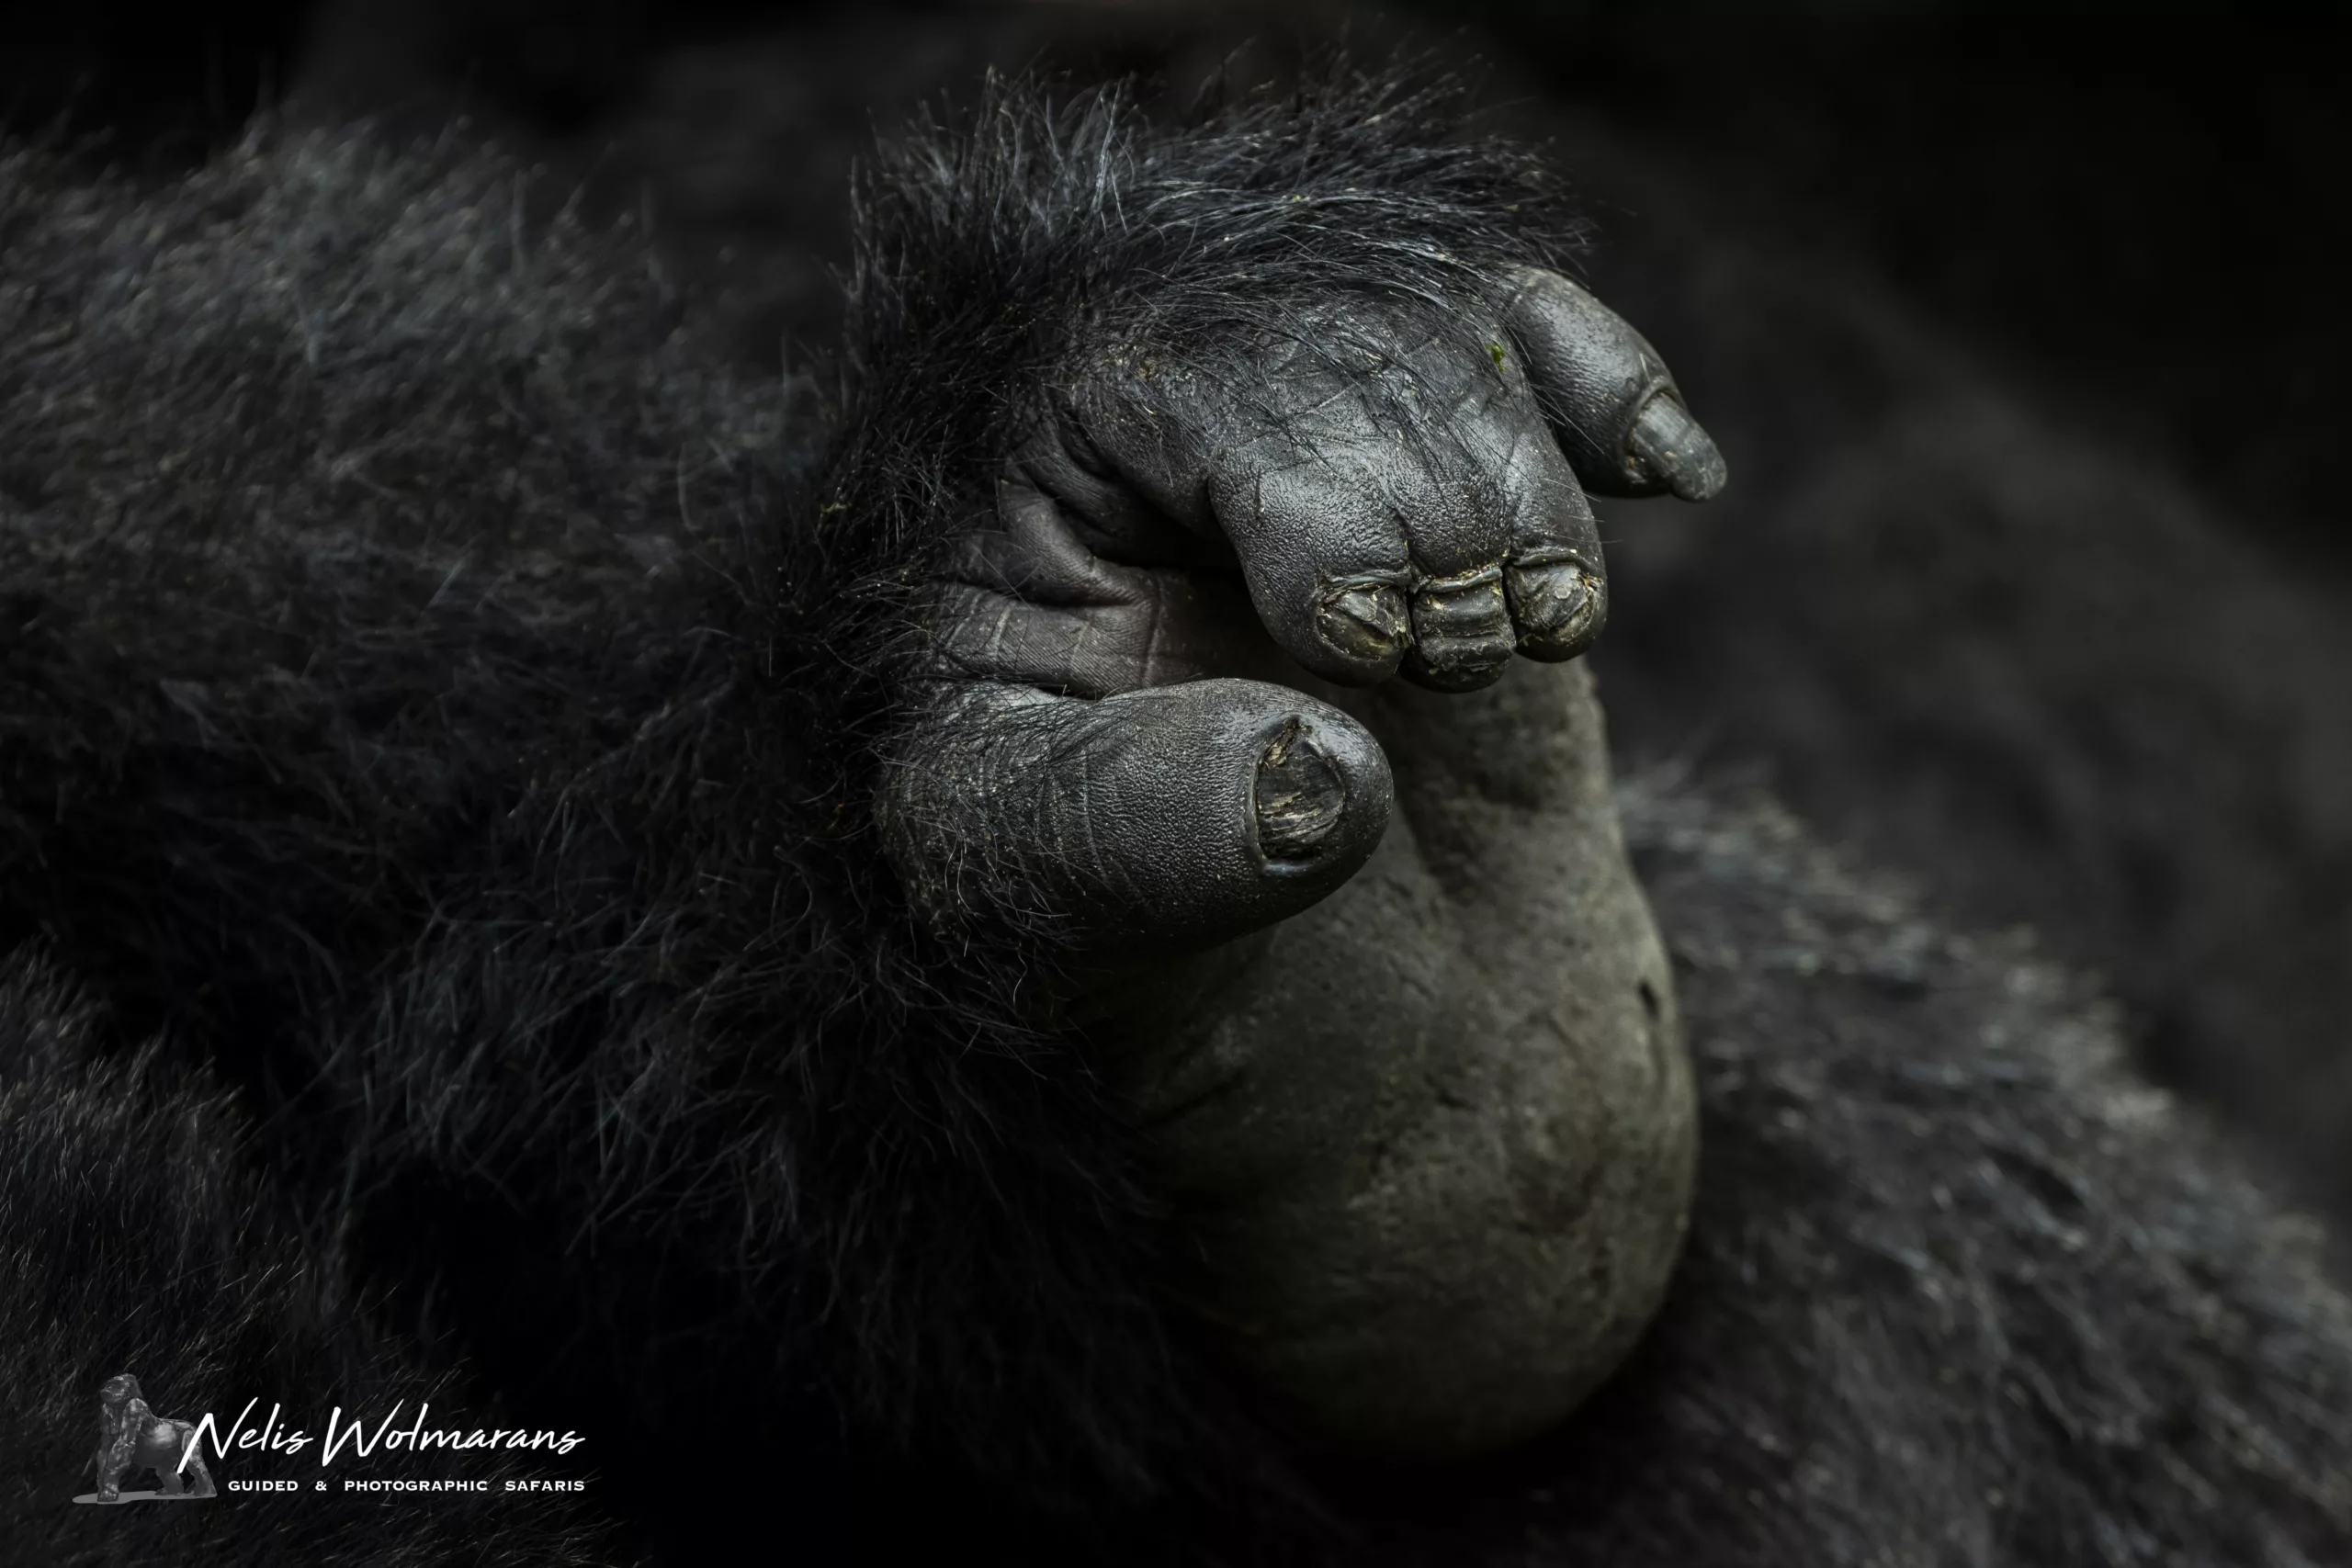 Uganda primate safari nelis wolmarans x pangolin gorilla foot